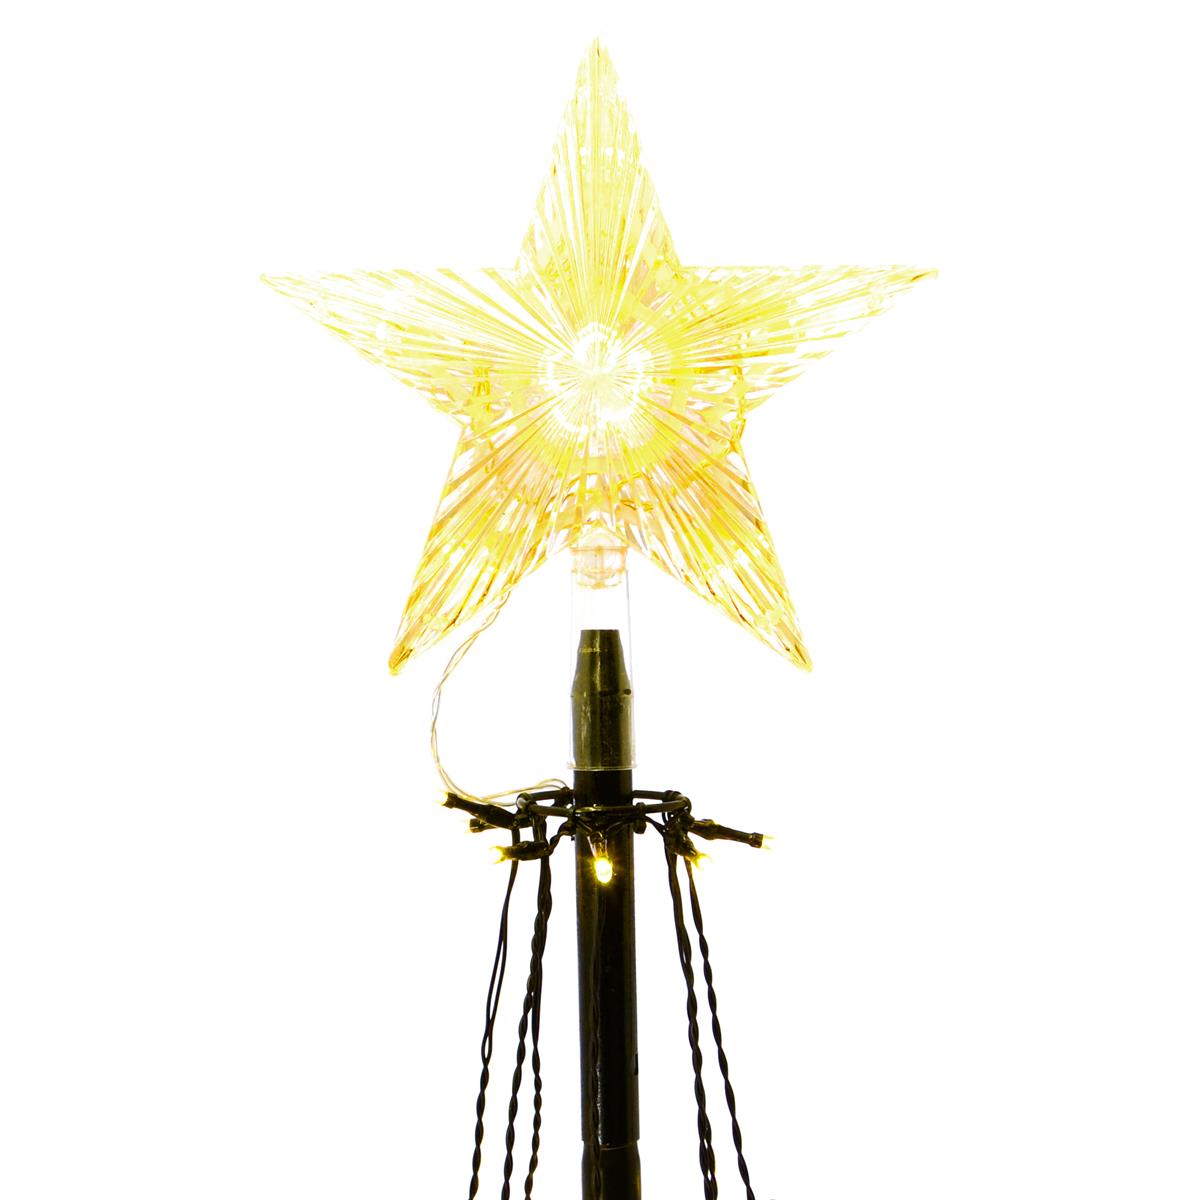 Lichtpyramide 106 LED warmweiß 180 cm Baum mit Stern Trafo Timer Xmas-Deko